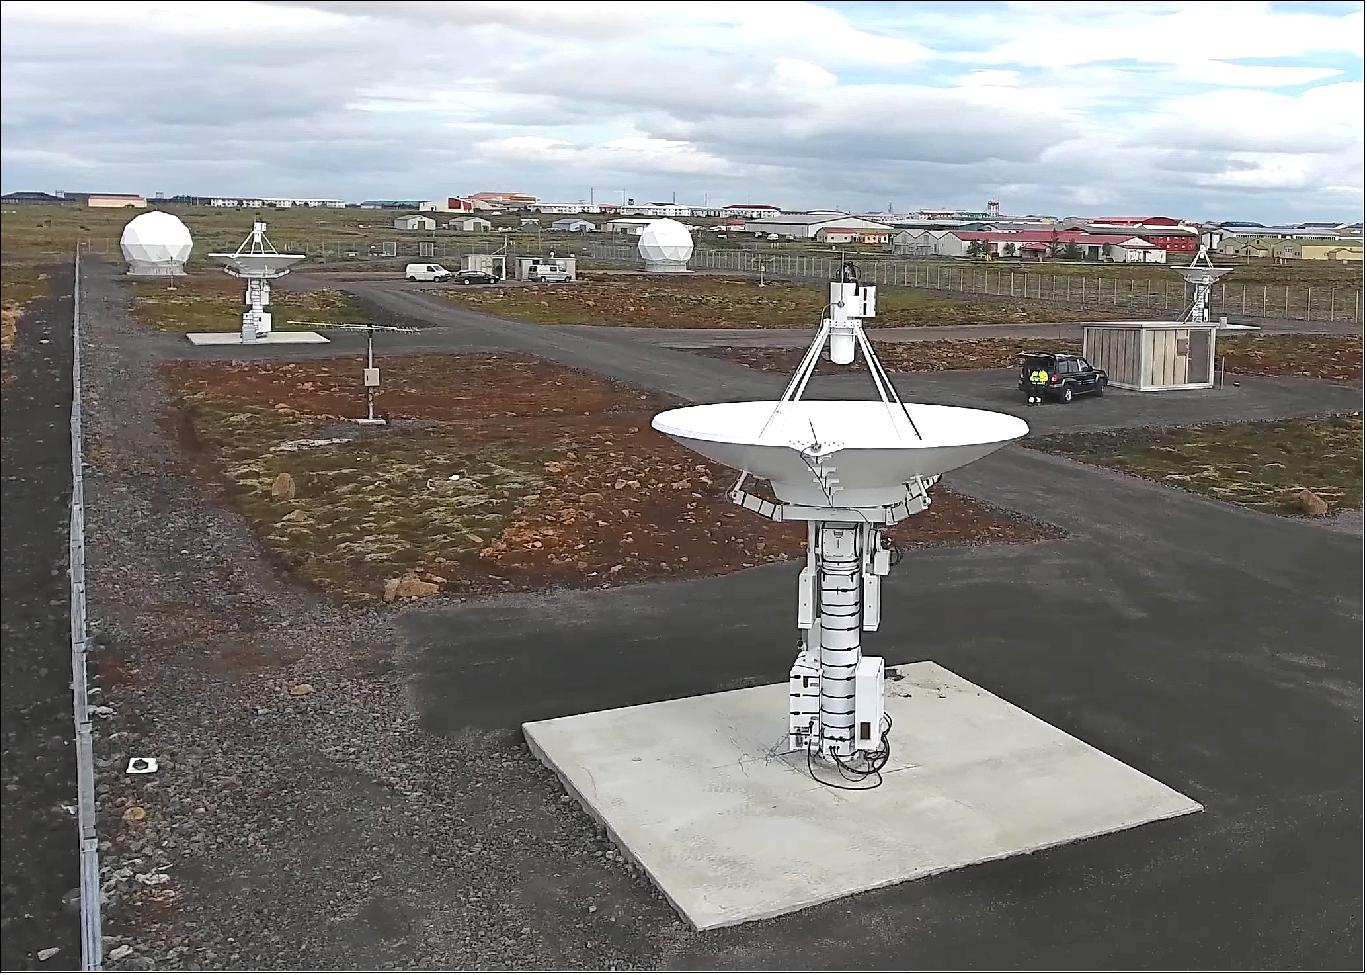 Figure 26: A 4.5 m diameter ground station antenna at Keflavik, Iceland (image credit: Planet Labs)